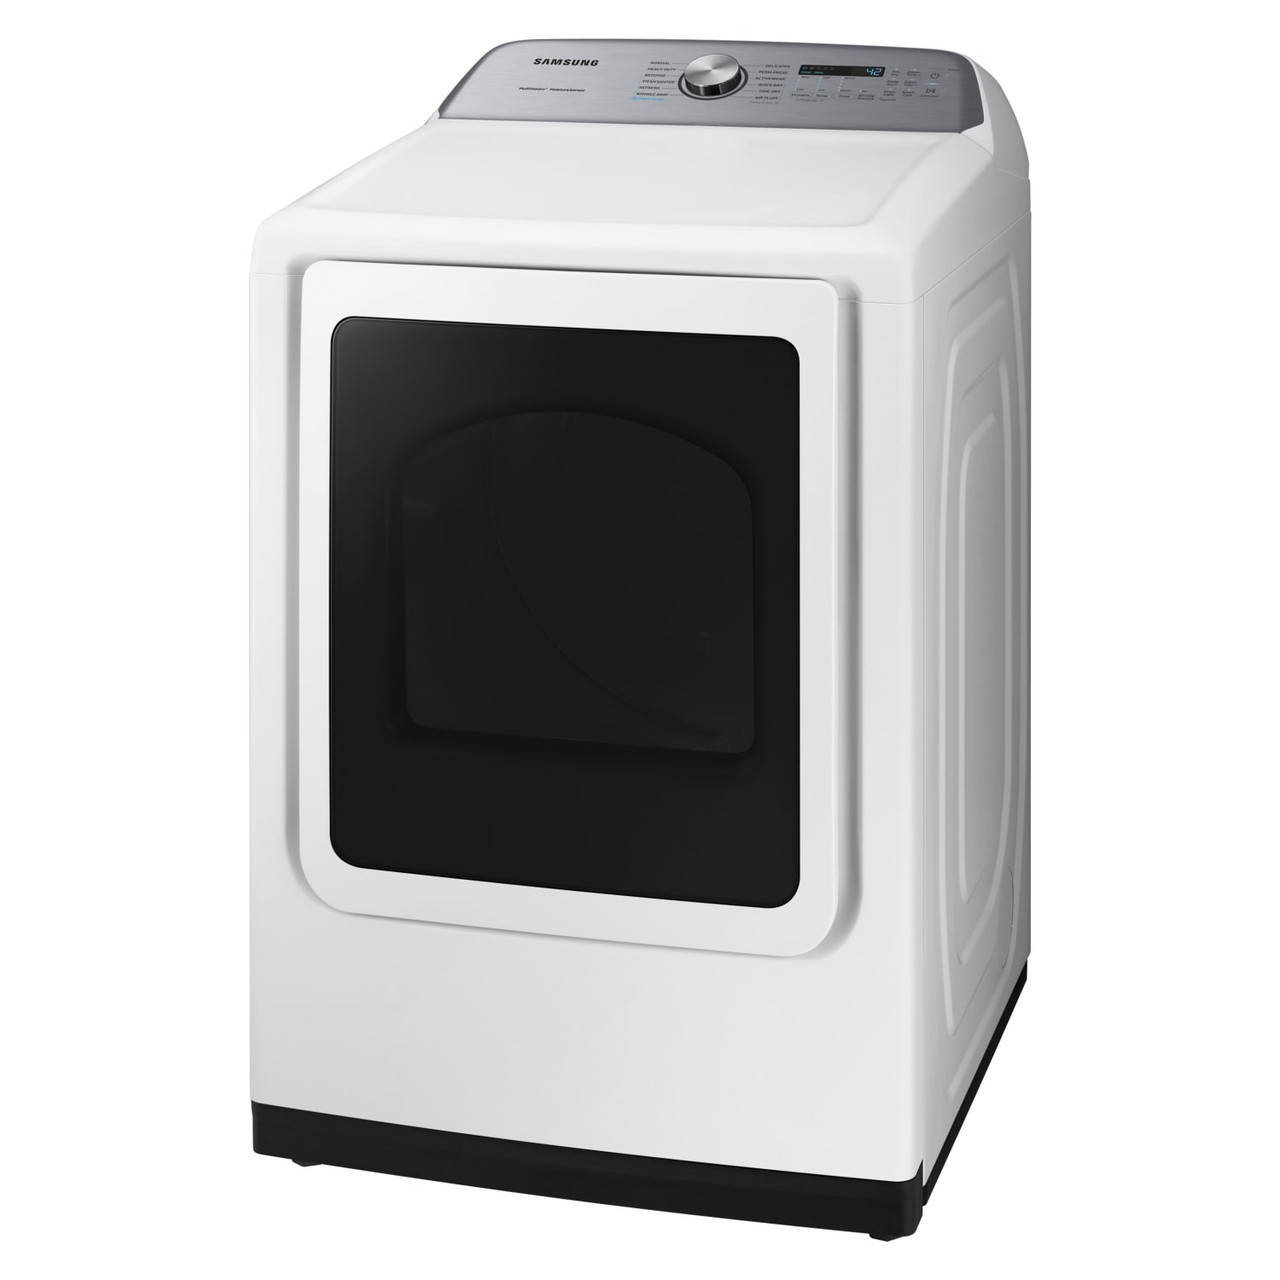 Samsung 7.4 cu. ft. Top Load Gas Dryer with Steam Sanitize+ - DVG50R5400W